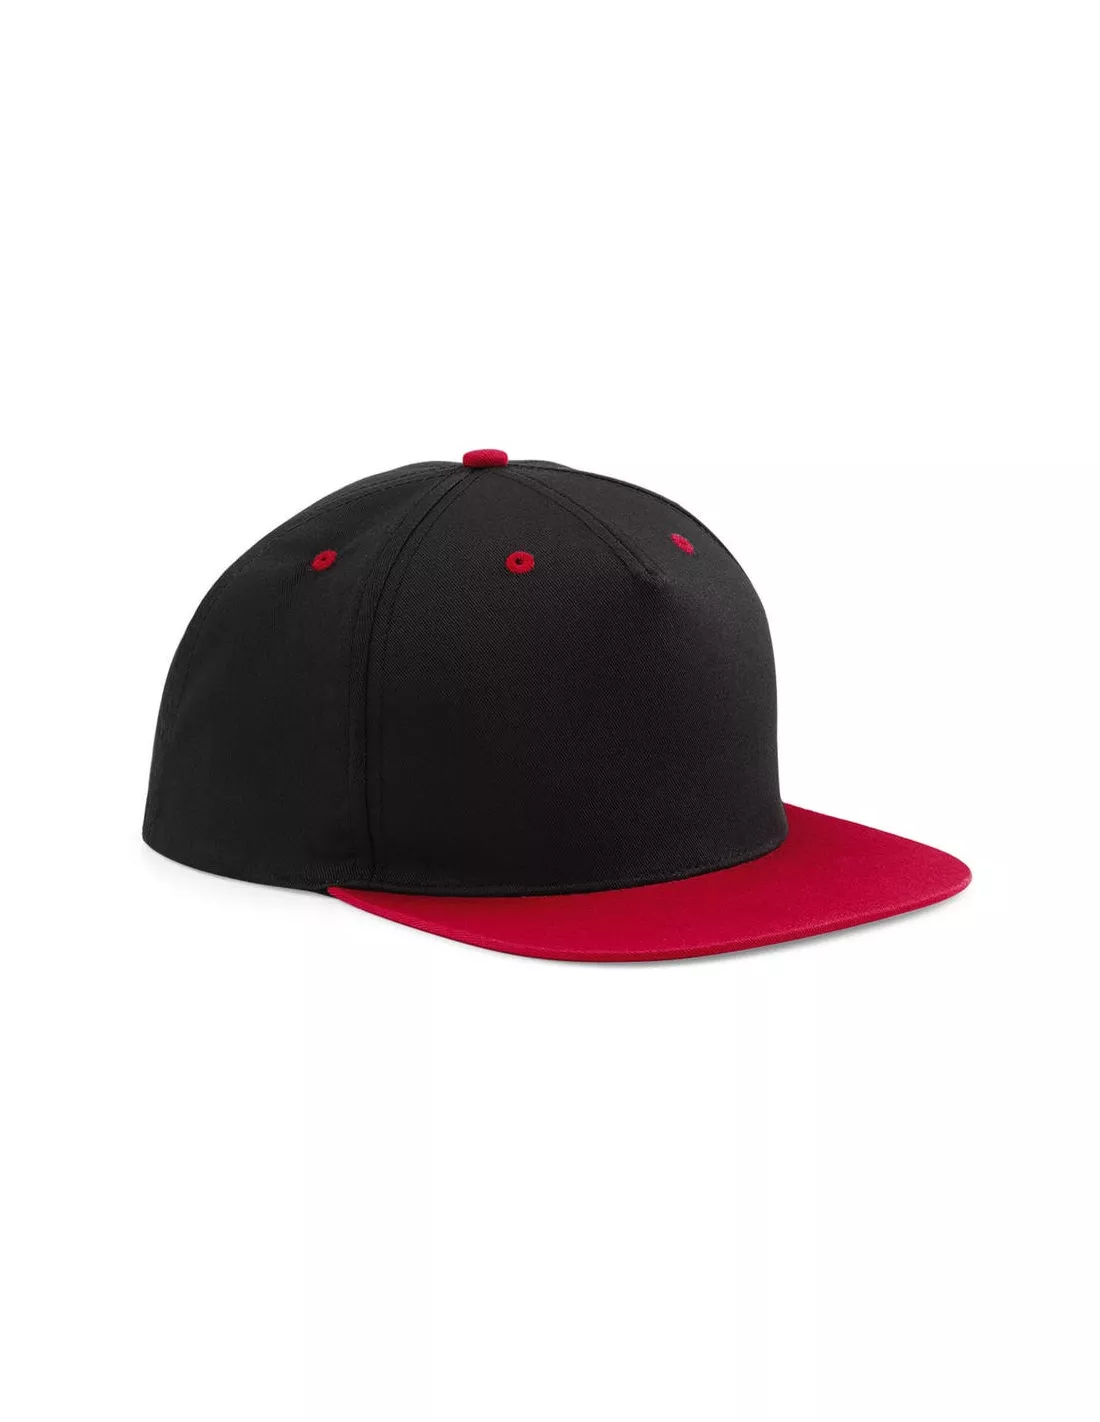 gorra plana personalizada roja